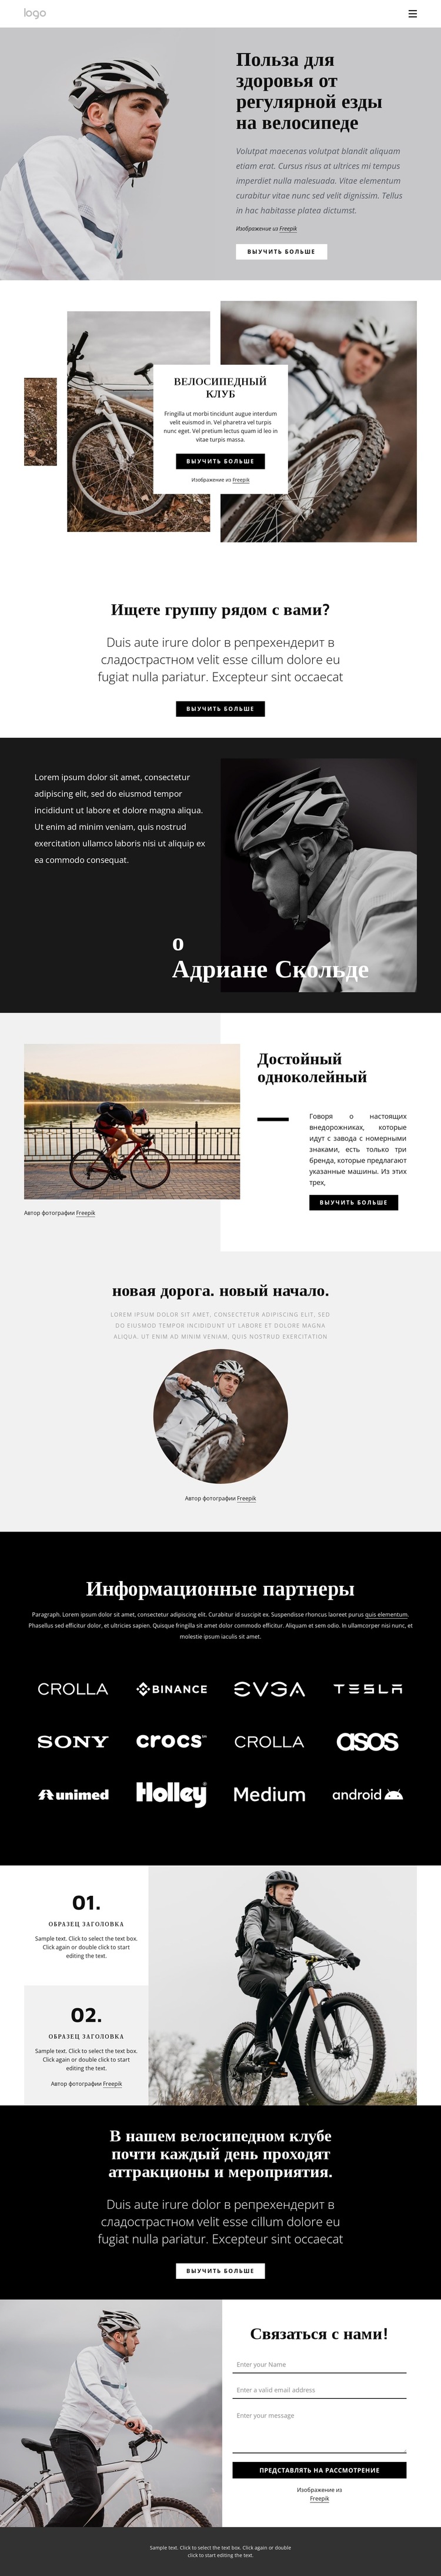 Преимущества регулярной езды на велосипеде Шаблон веб-сайта